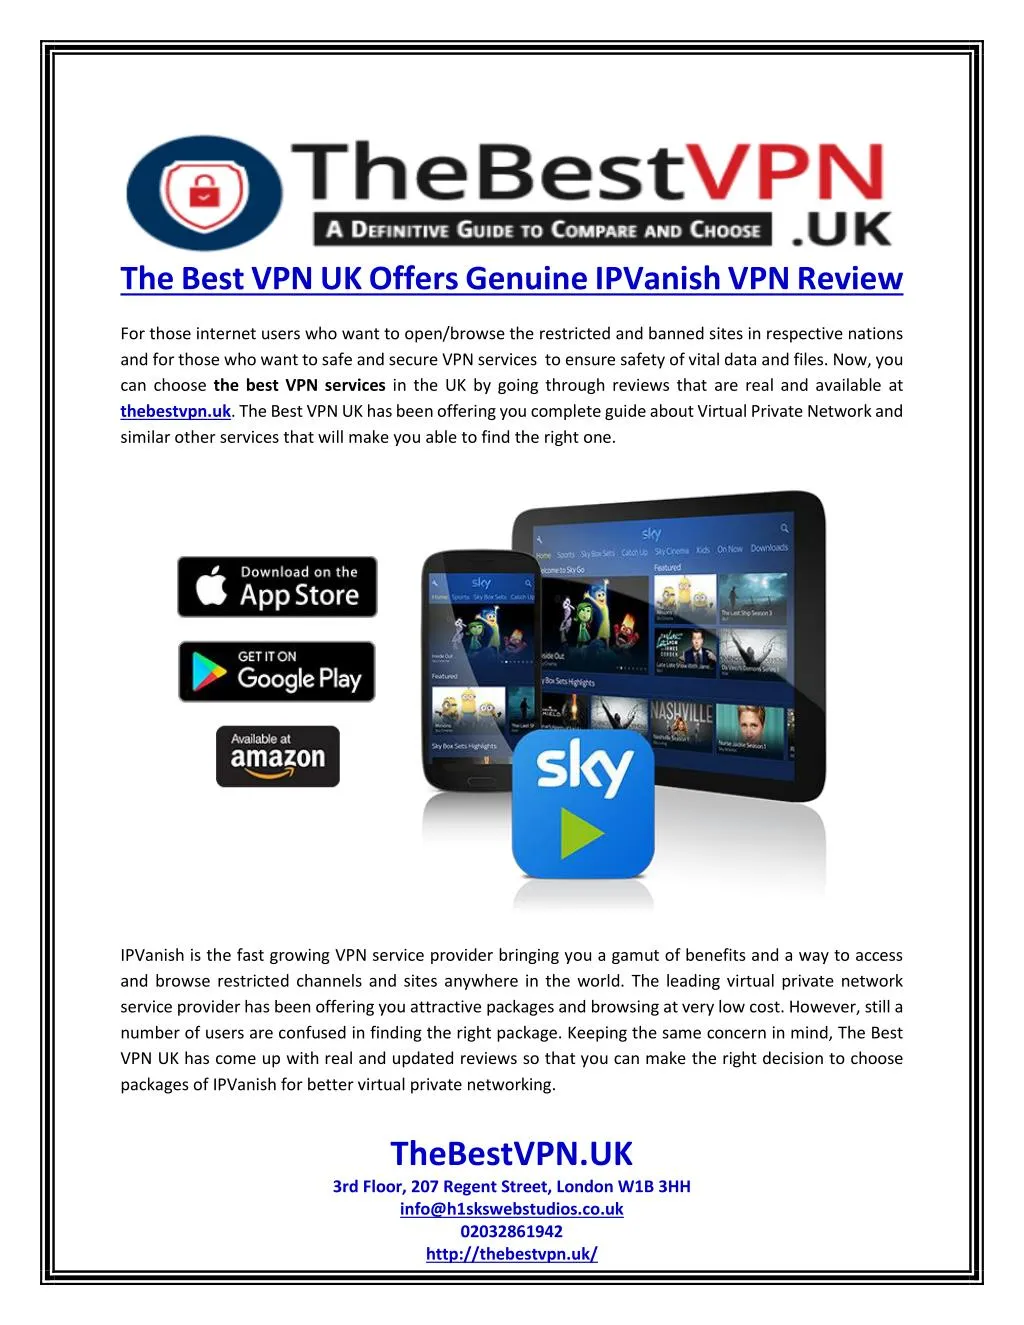 the best vpn uk offers genuine ipvanish vpn review